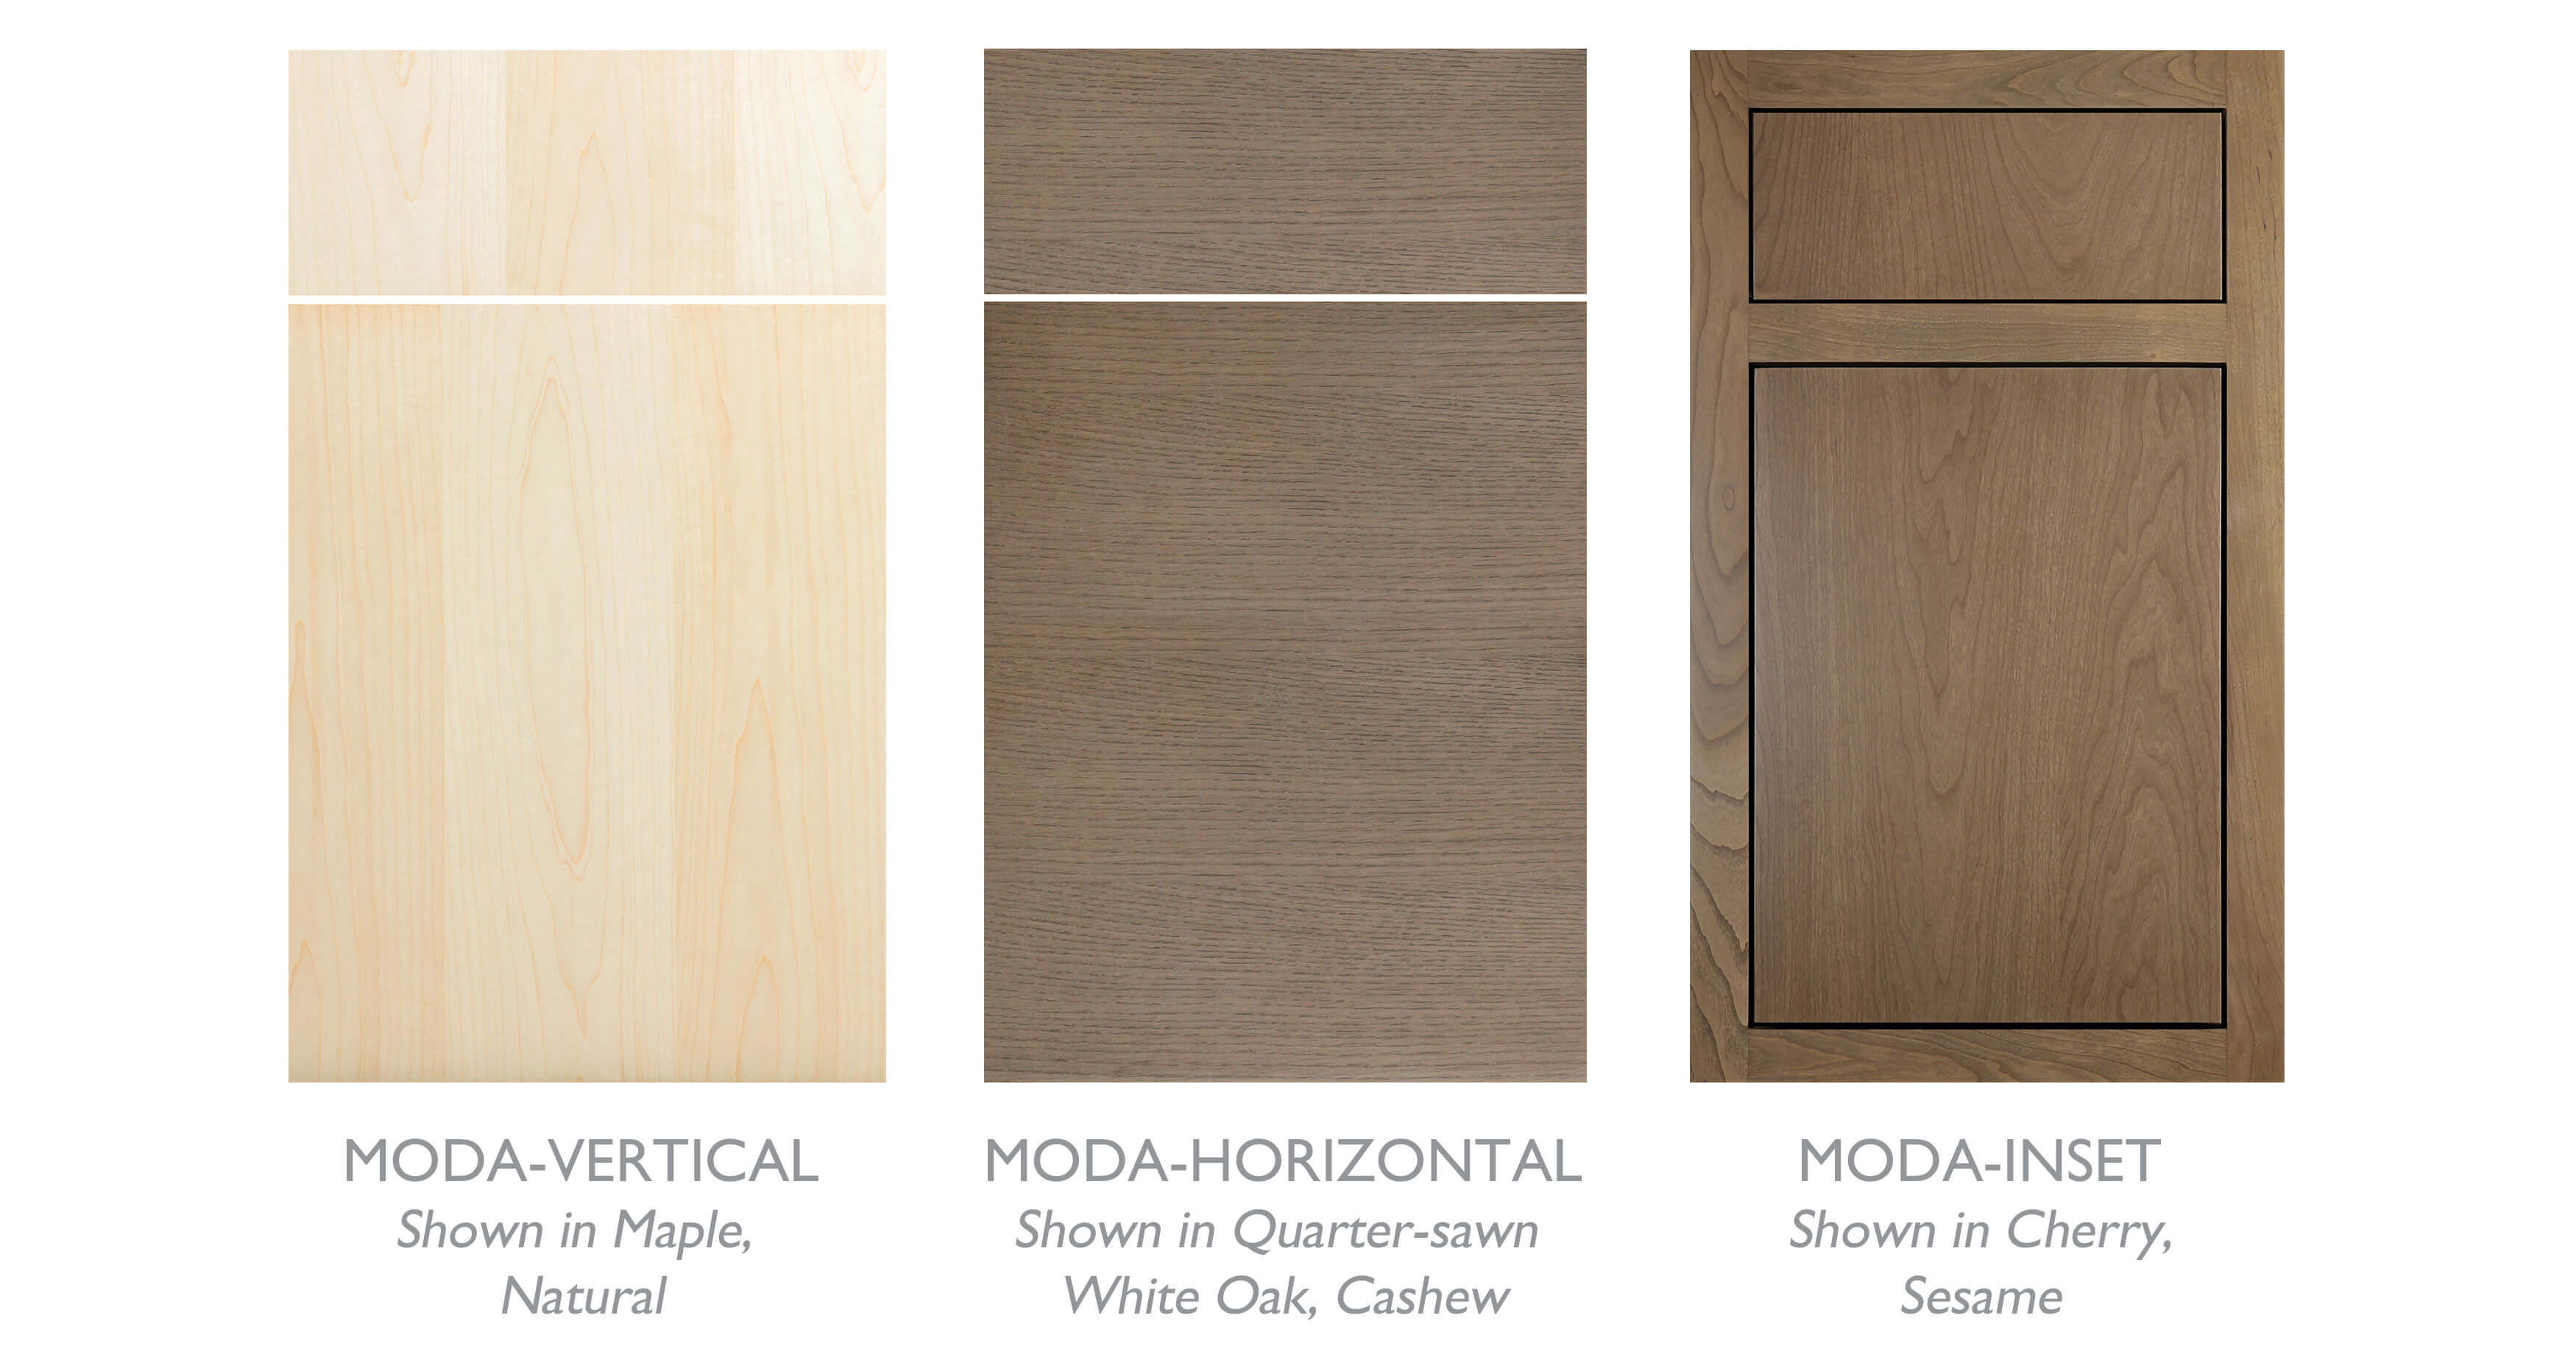 Dura Supreme's Moda door style, a slab wood door shown in 3 different wood veneers and stains.